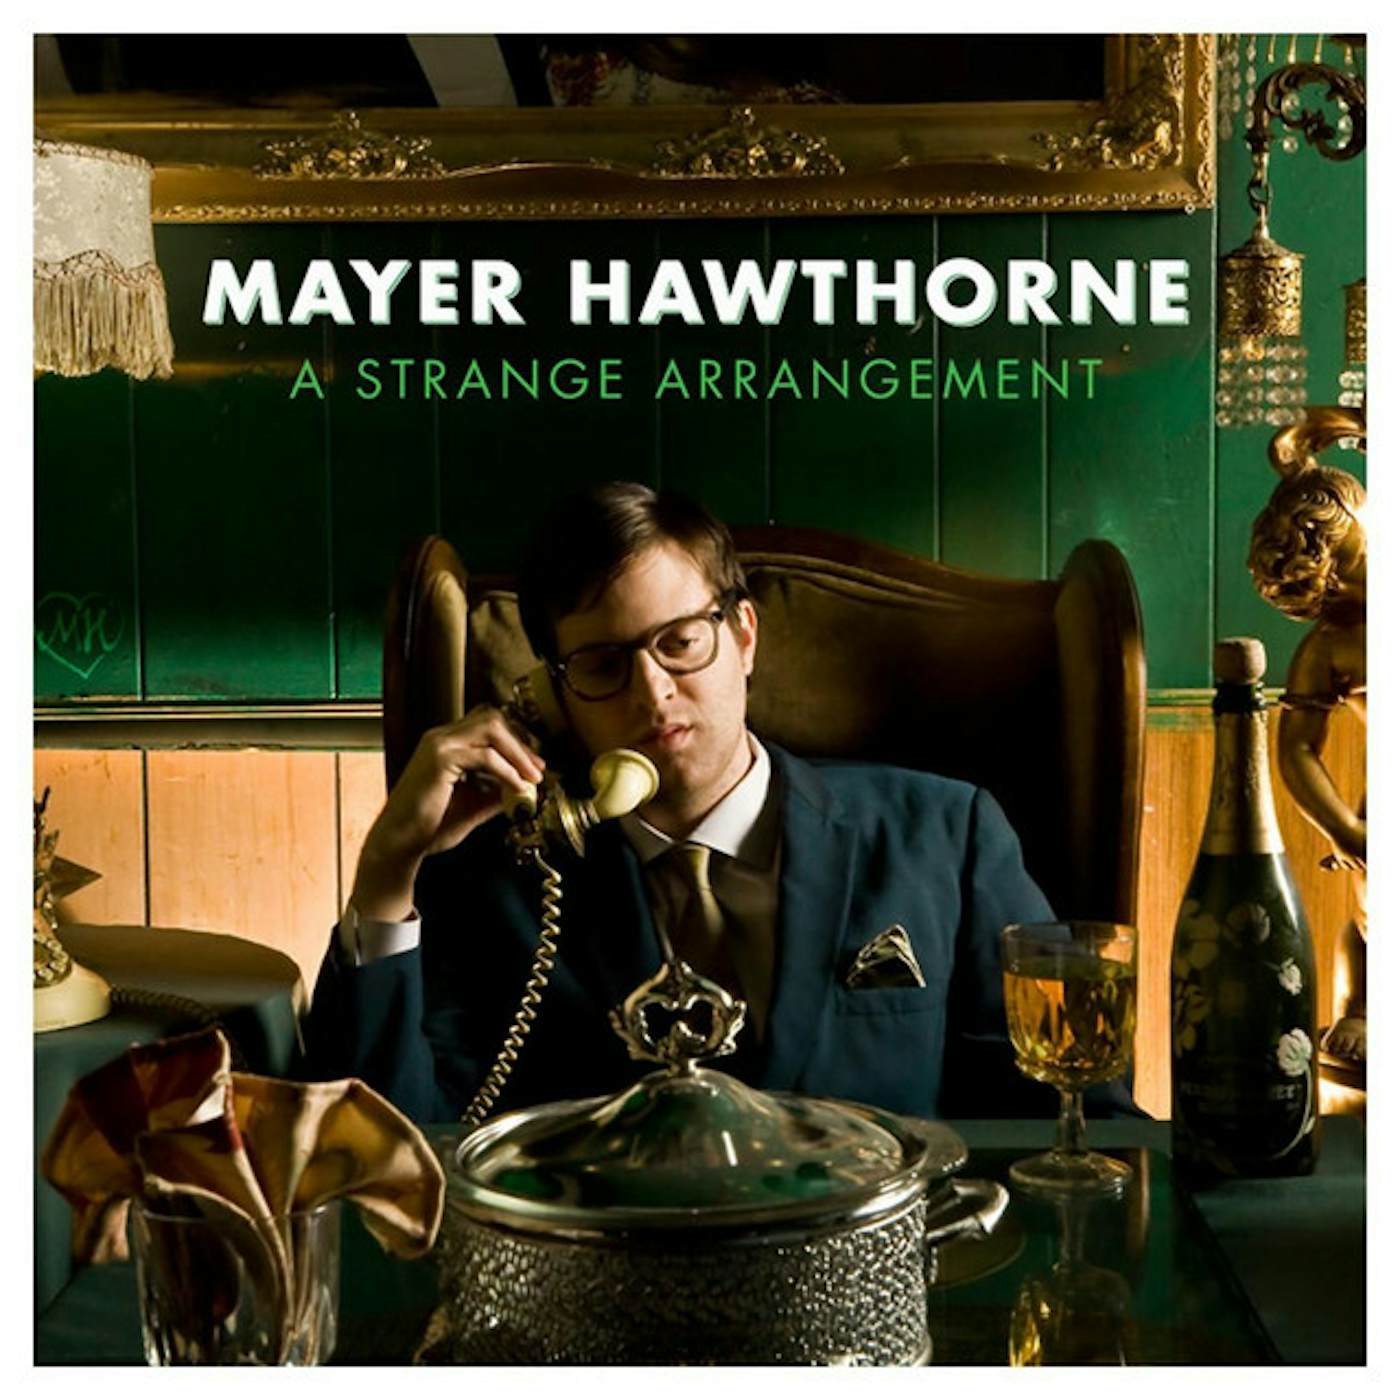 Mayer Hawthorne STRANGE ARRANGEMENT Vinyl Record